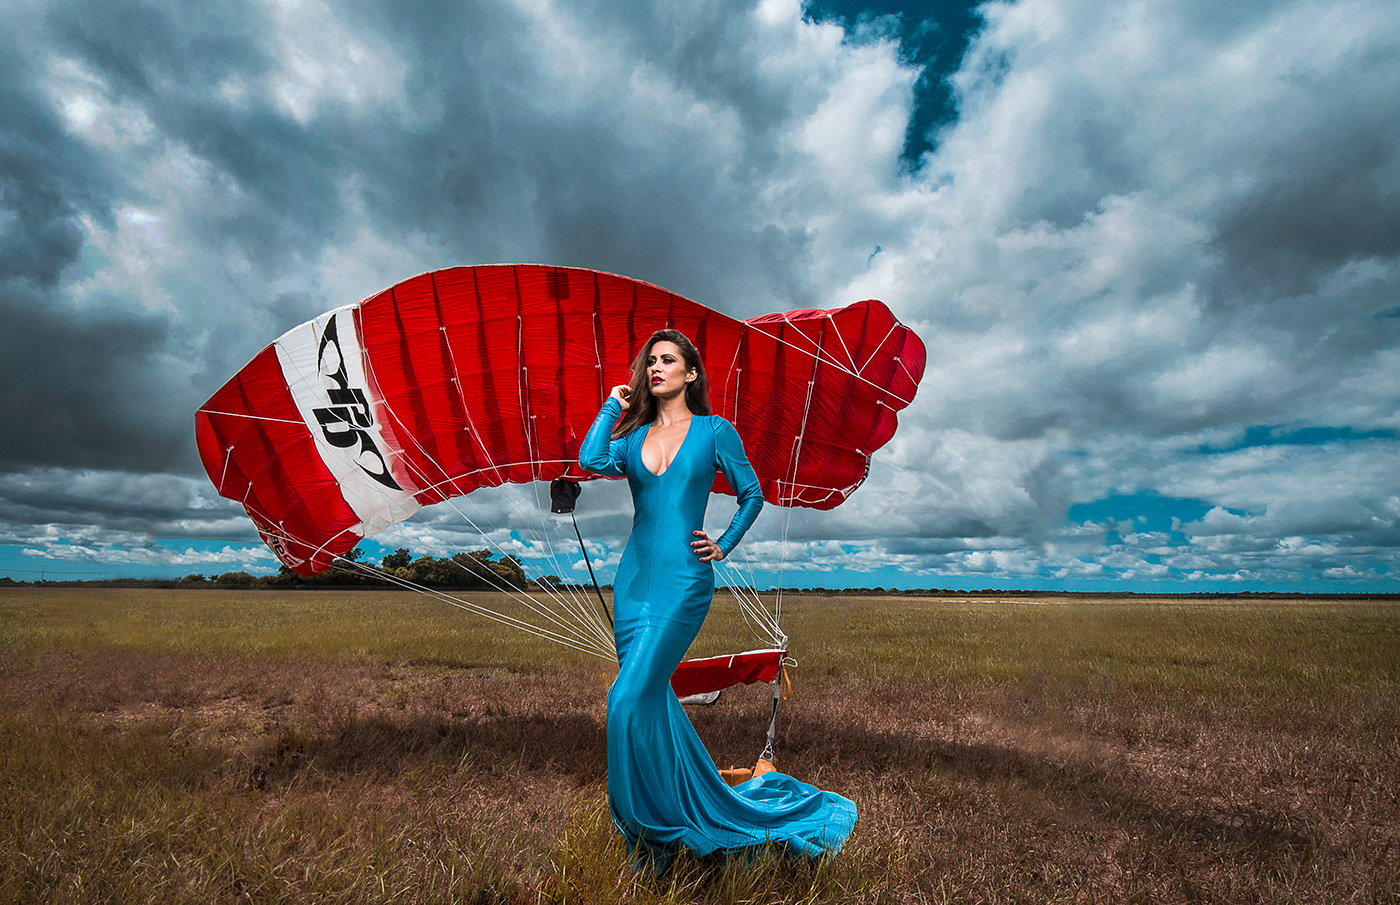 editorial miami editorial anais zanotti skydiver Parachute fashion editorial Stunt Woman bond girl